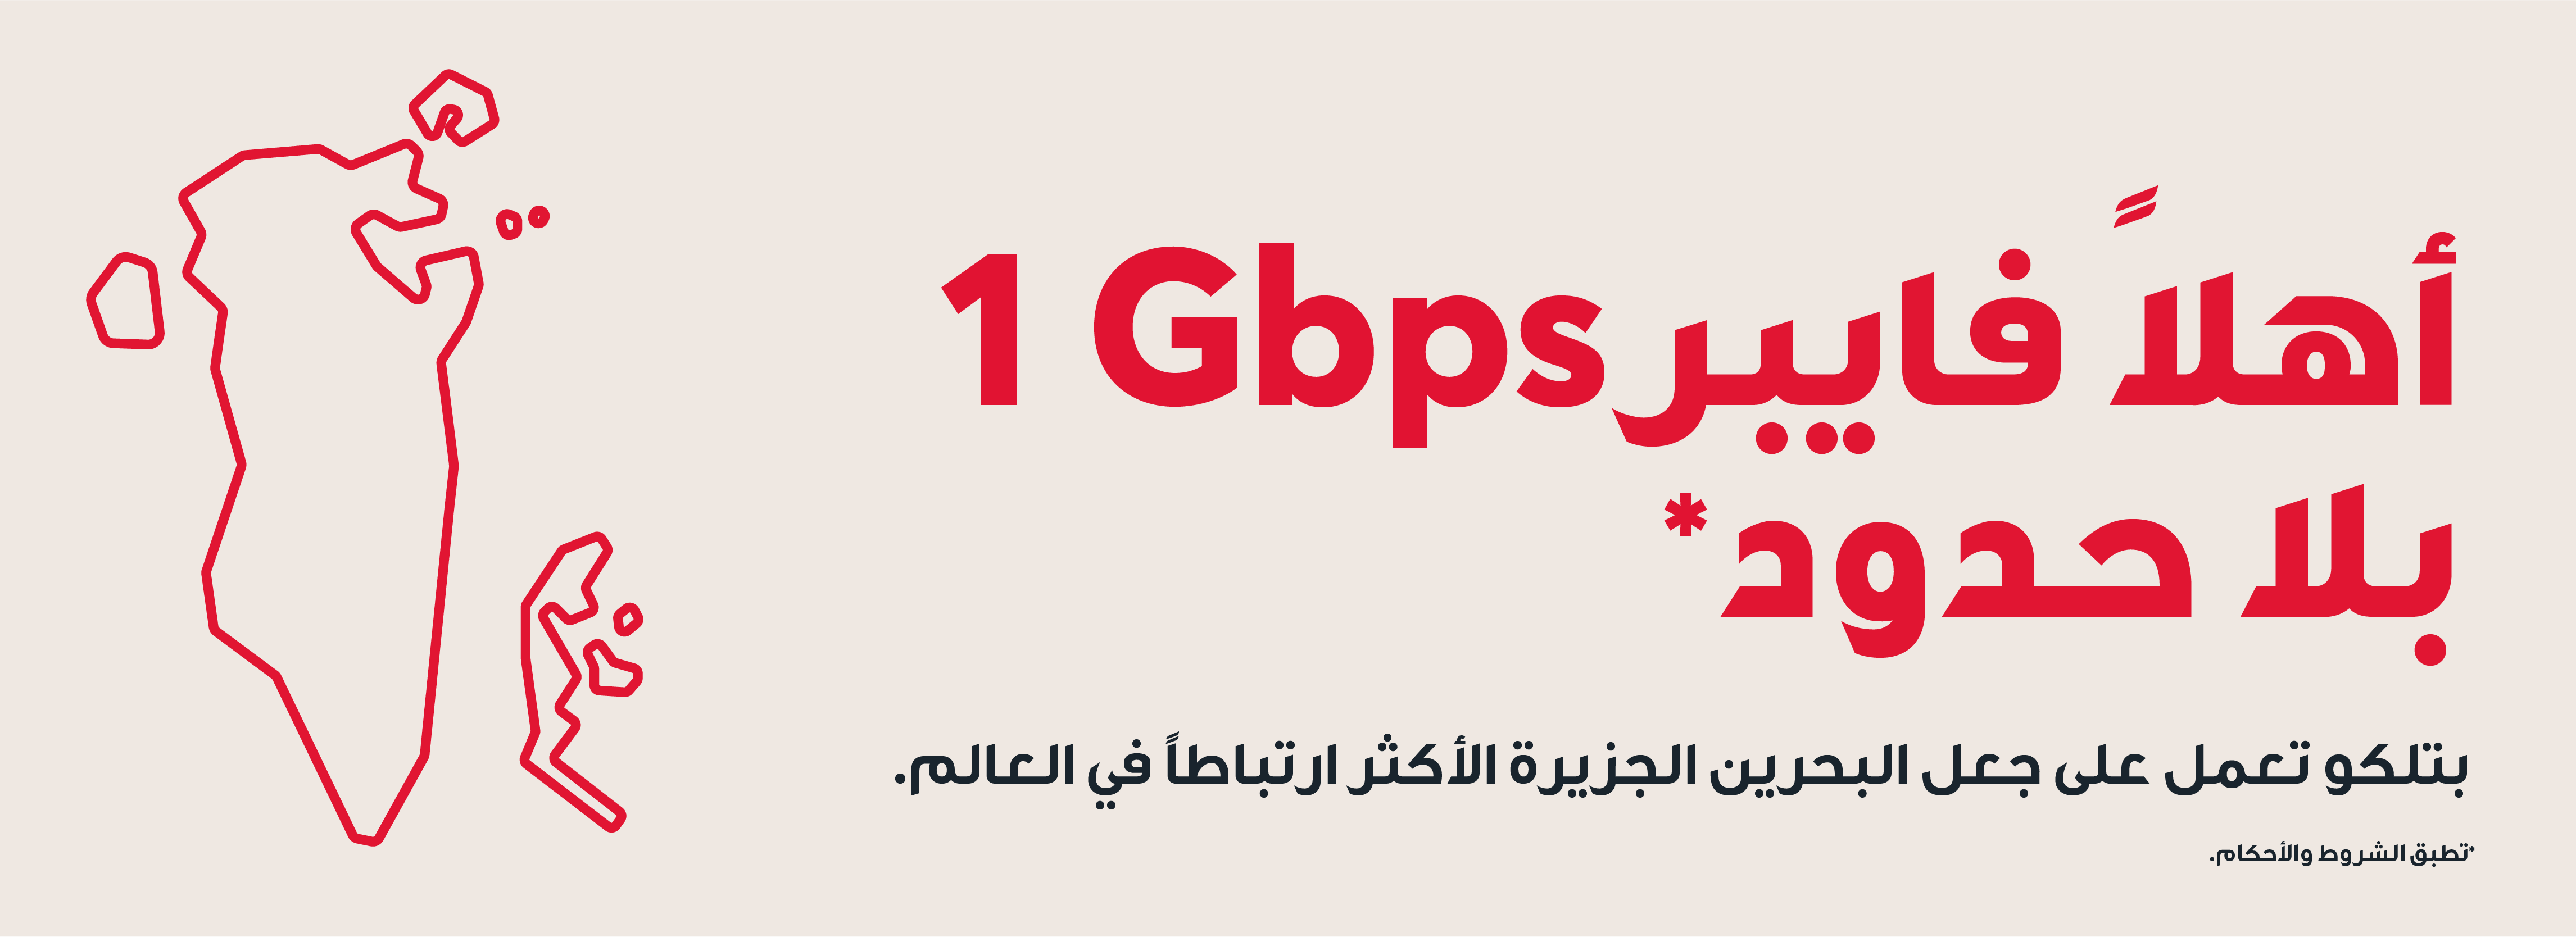 Bahrain Home Internet Packages / Unlimited plans Copy